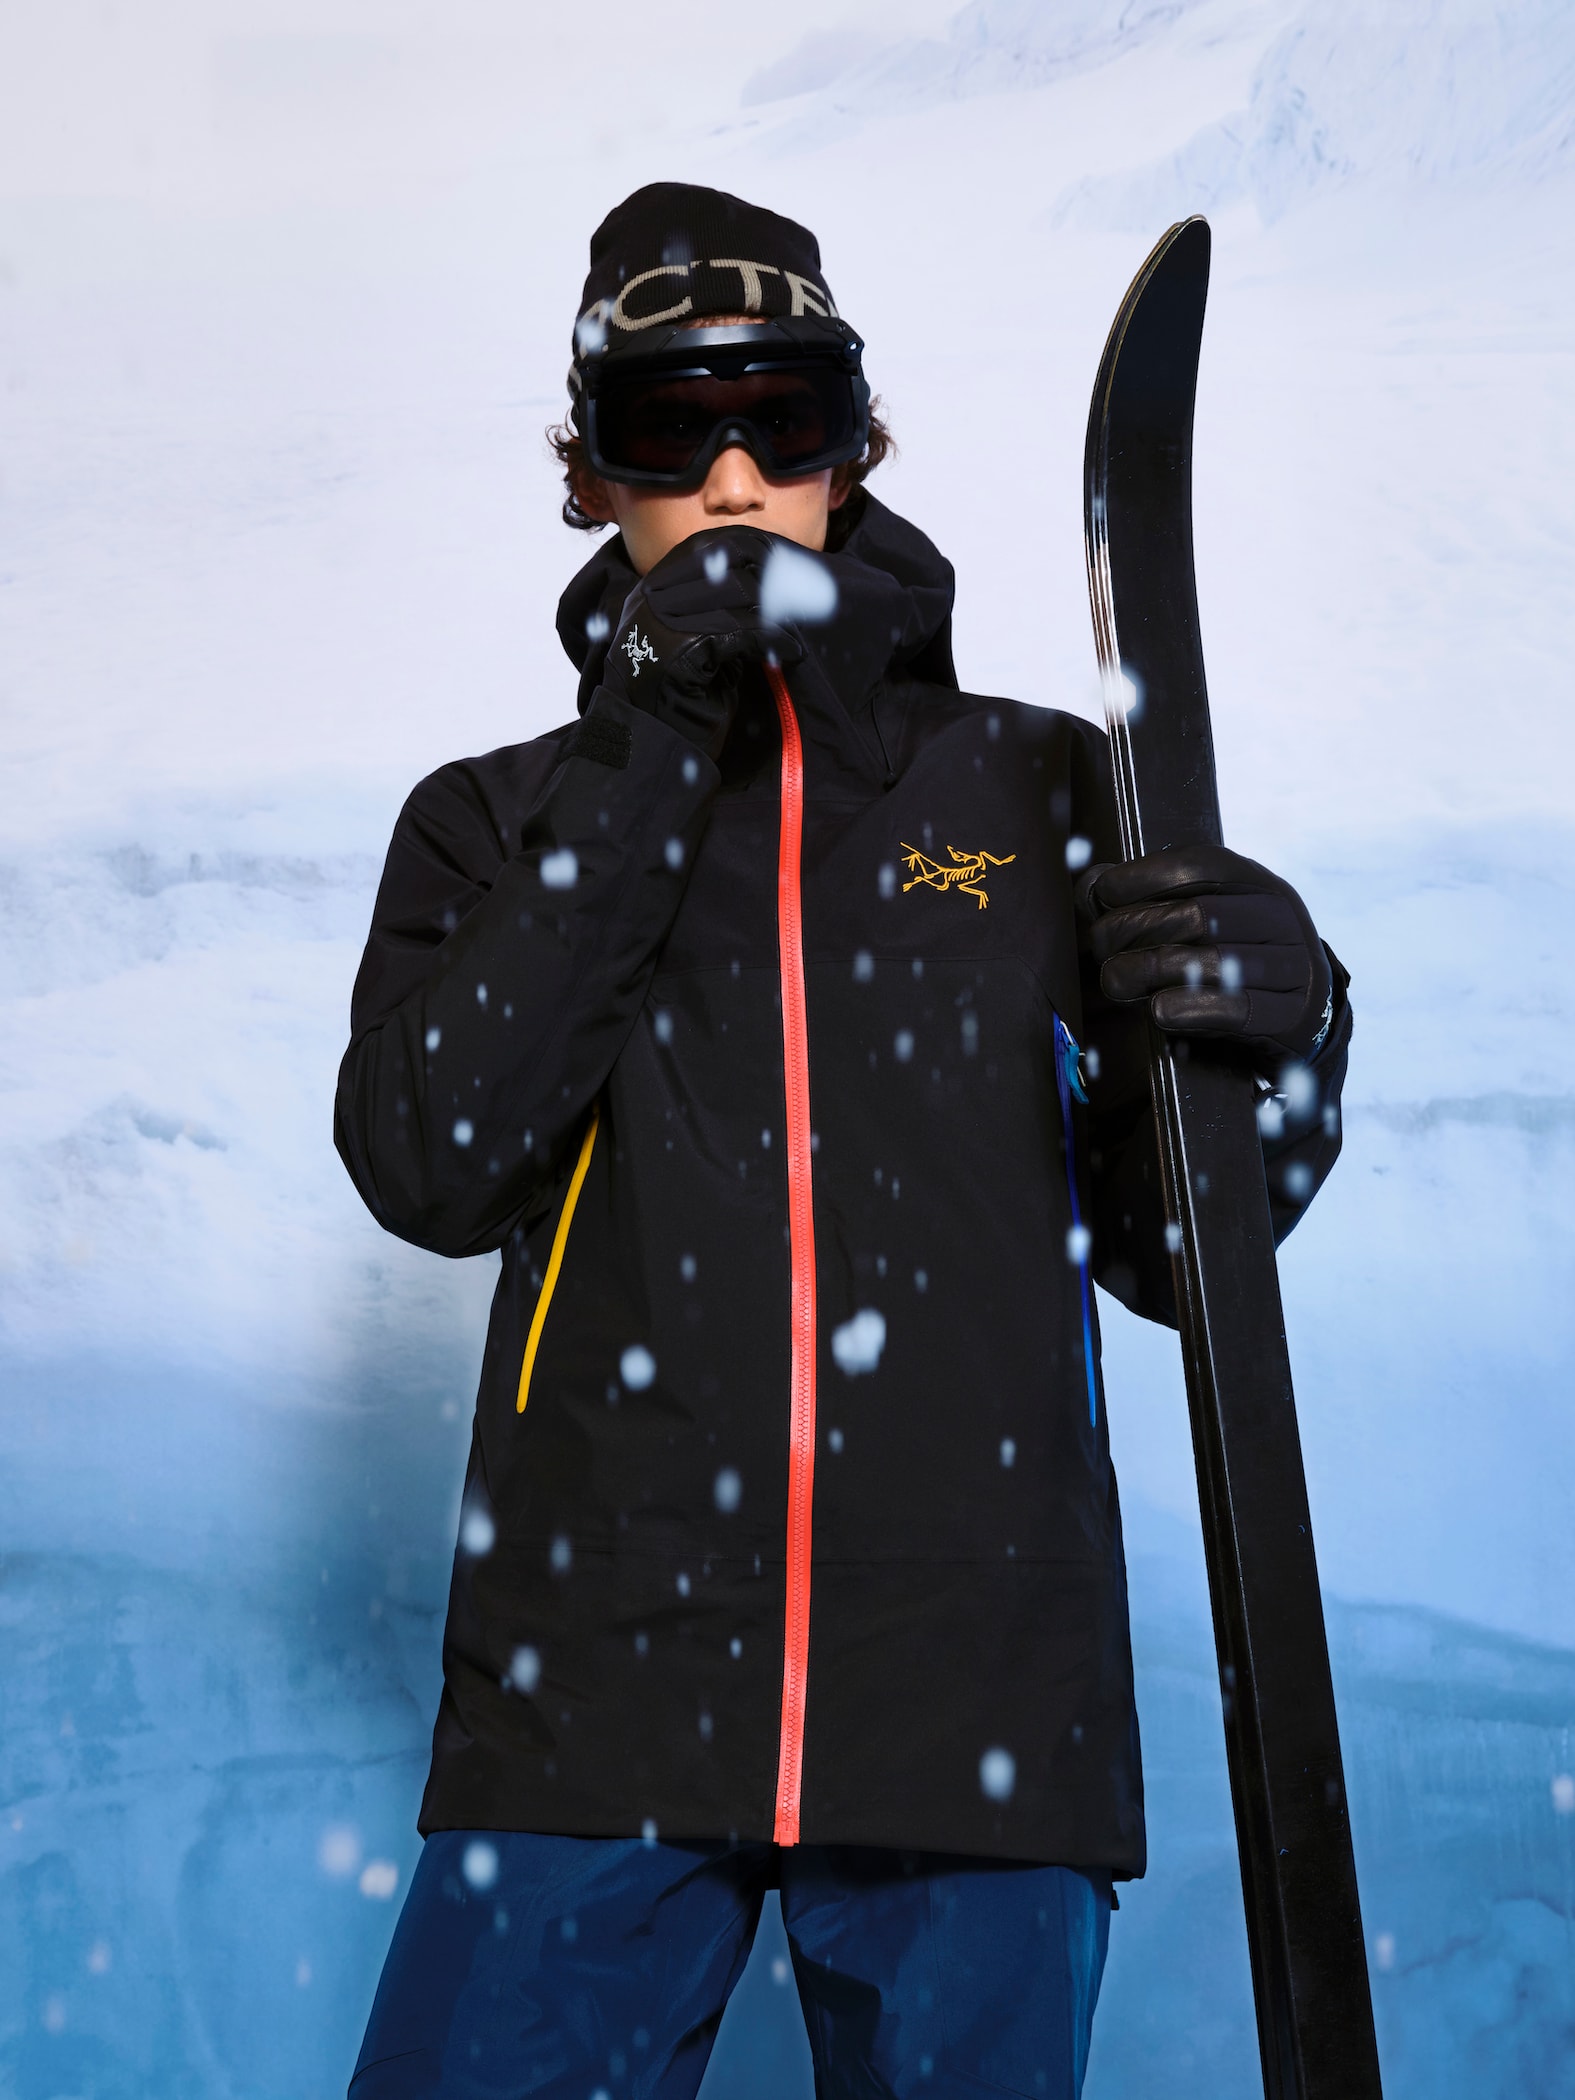 ARC'TERYX 推出复刻款特别配色 RUSH JACKET 滑雪服